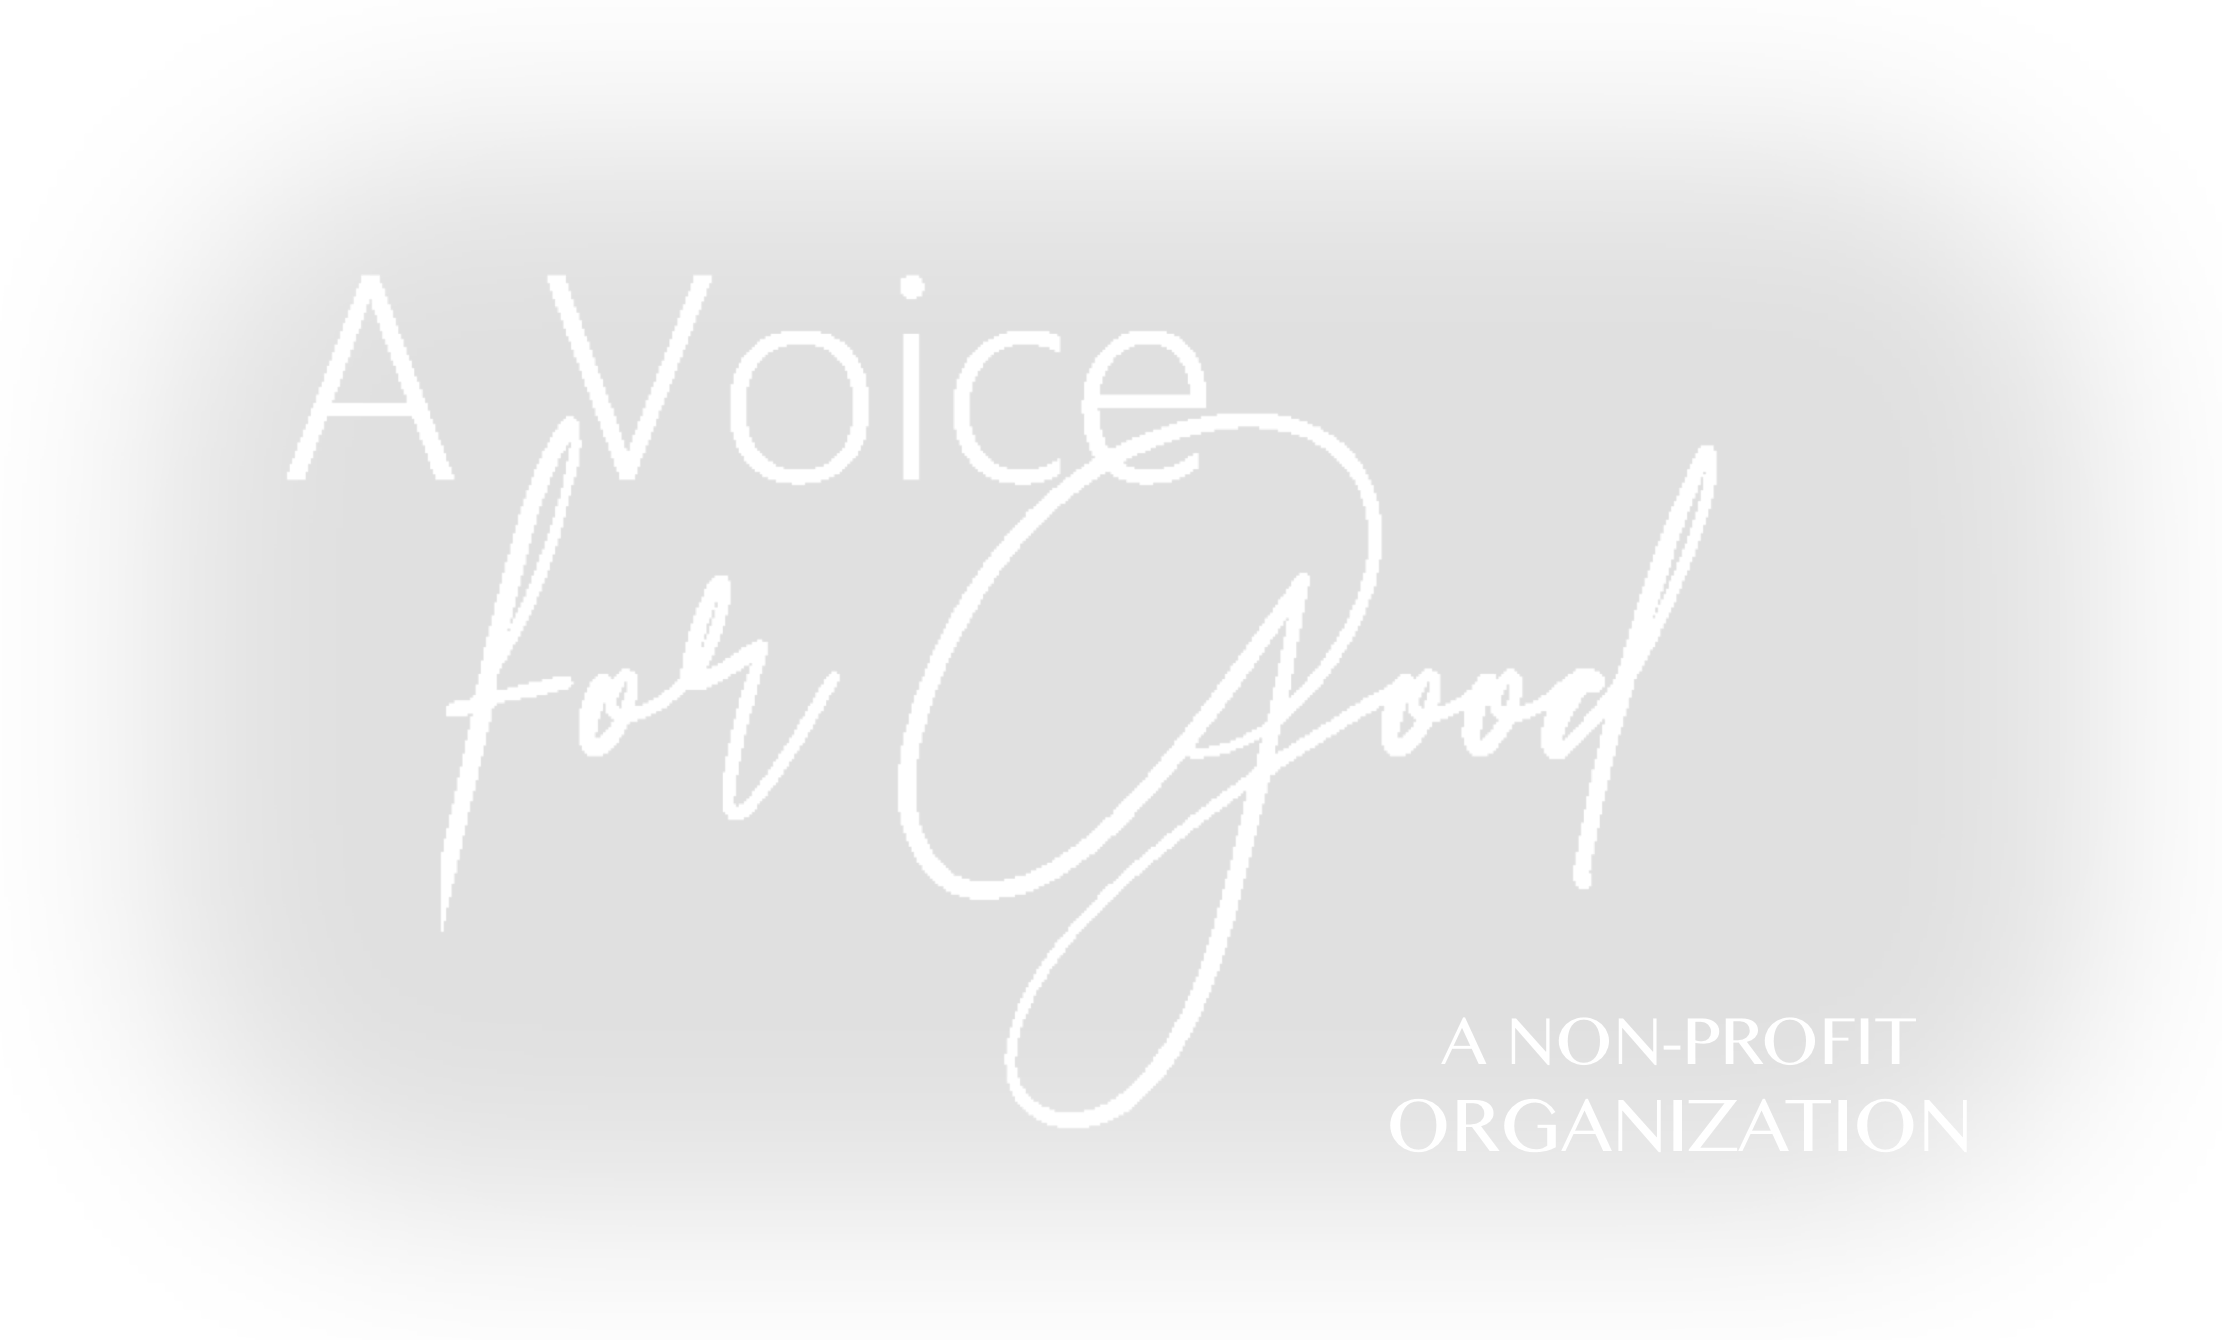 A Voice for Good - A Non-profit Organization